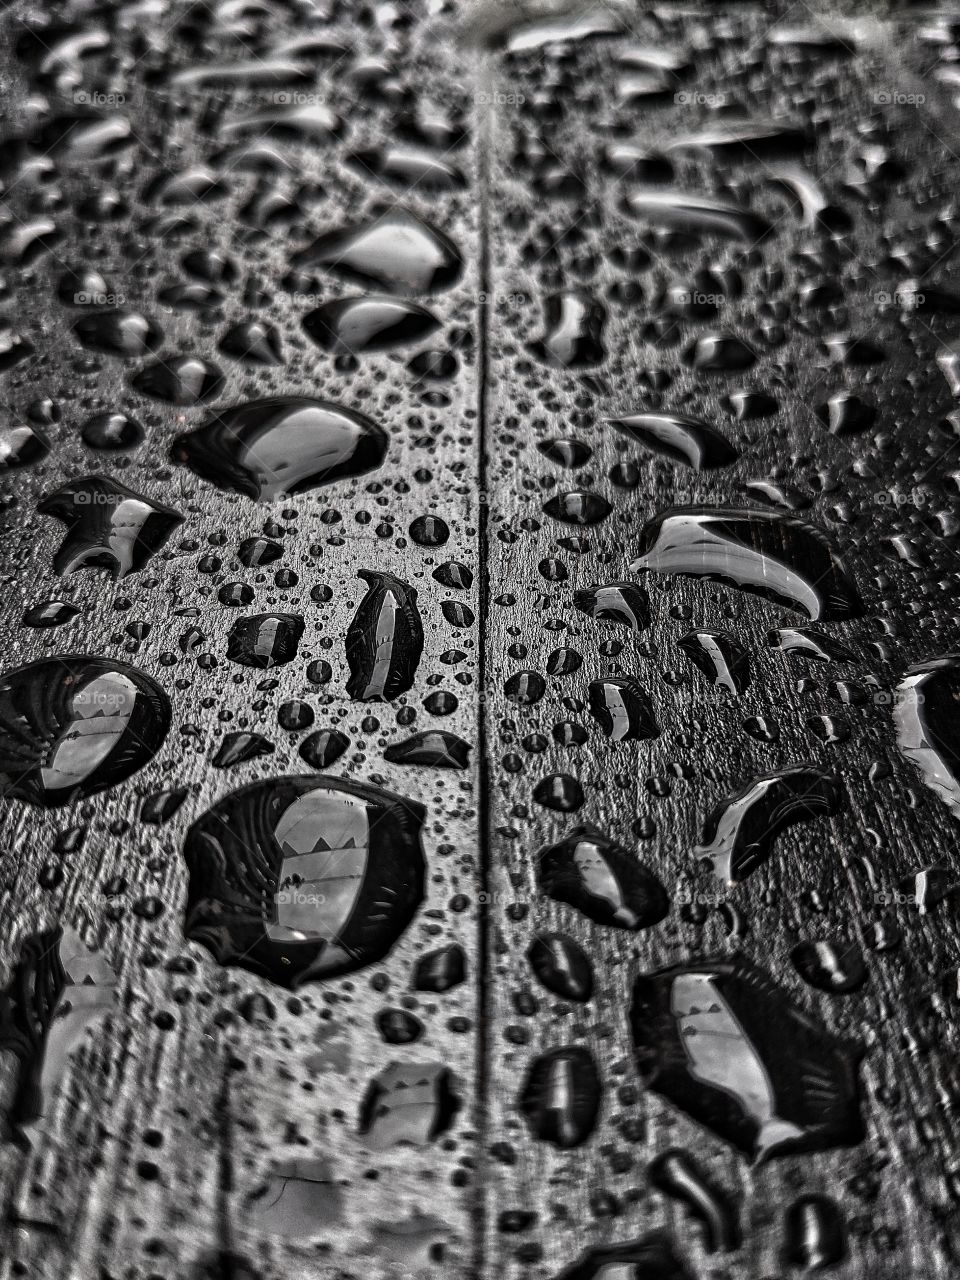 water droplets on wood in monochrome